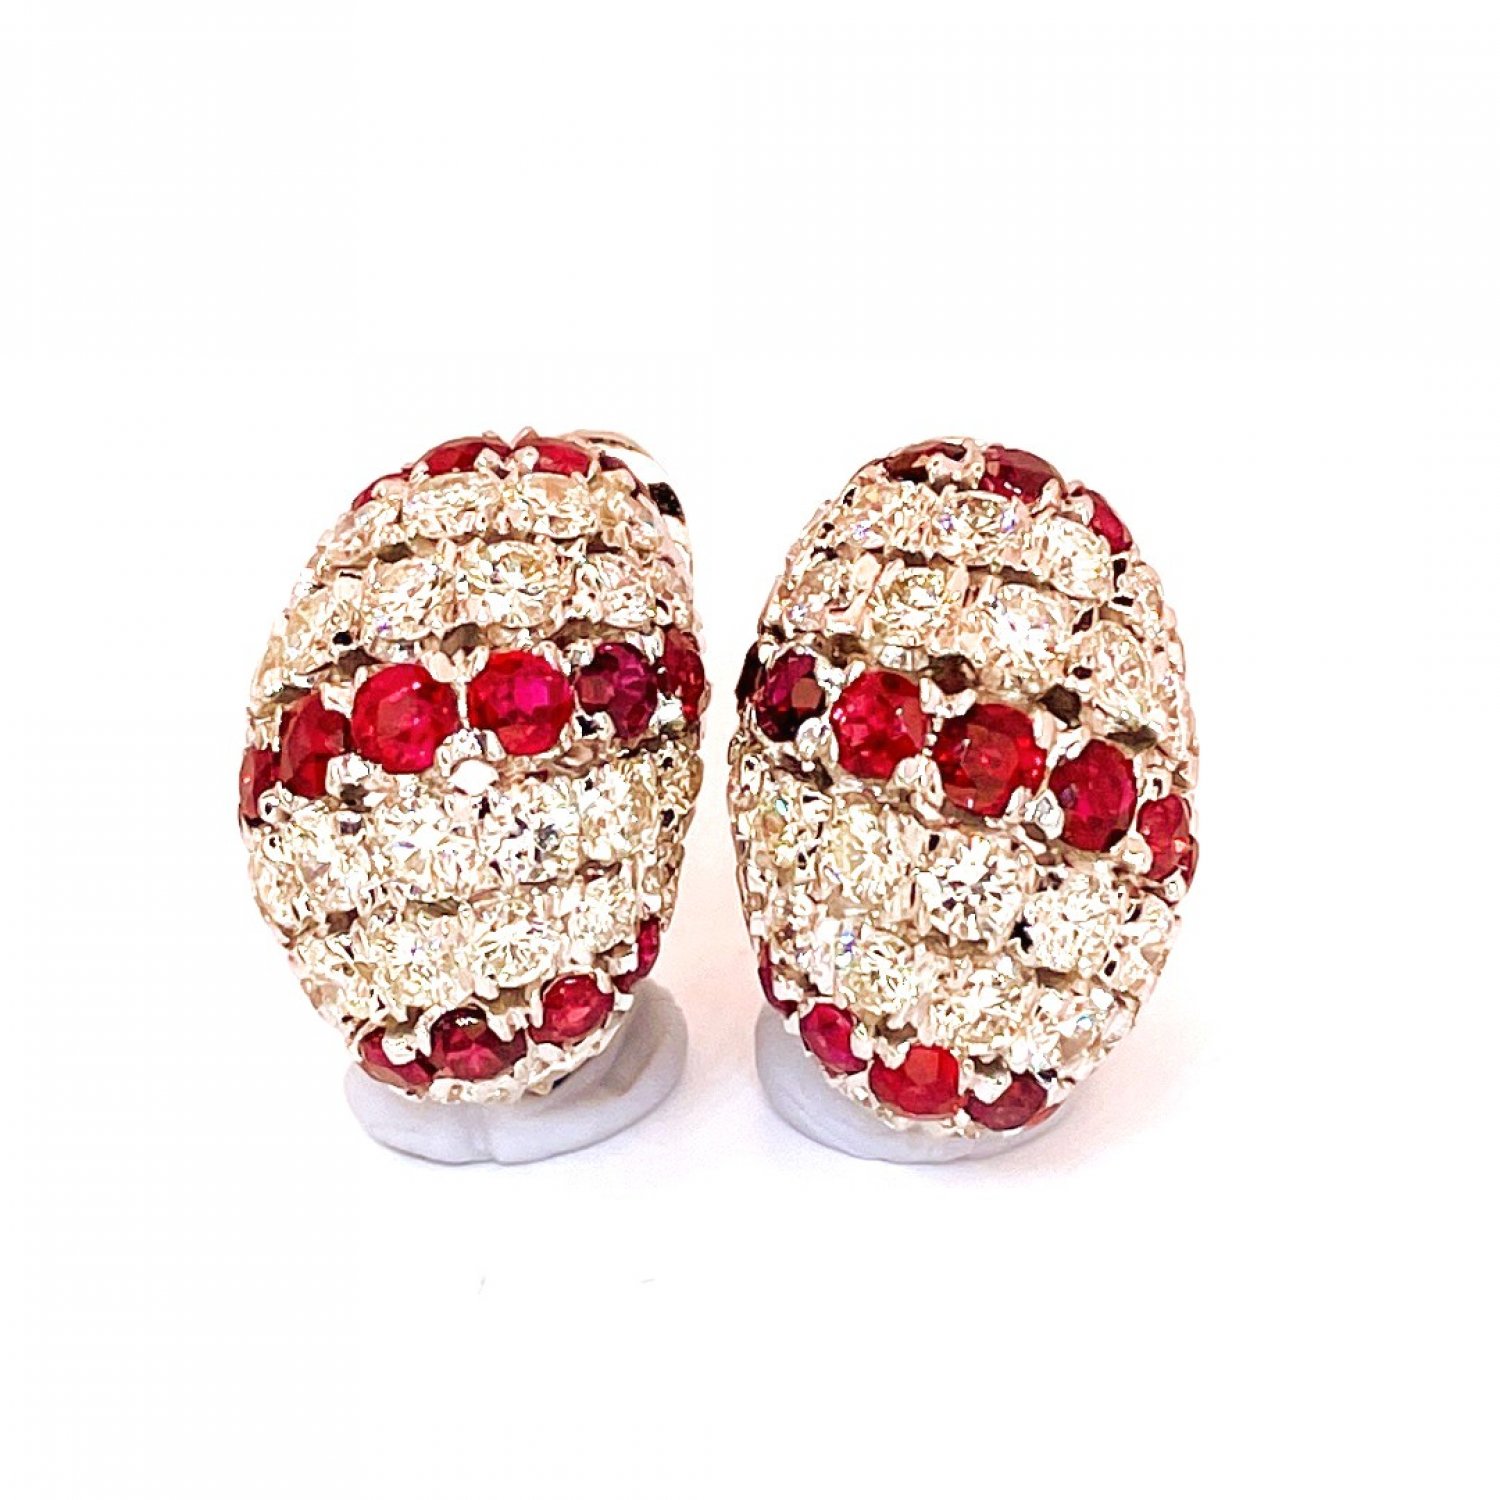 NO HEAT UNHEATED Ruby Diamond Earrings 18K White Gold 750 18kt Dome Earrings 1950s Diamond Earrings Mid Century Earrings Natural Red Ruby